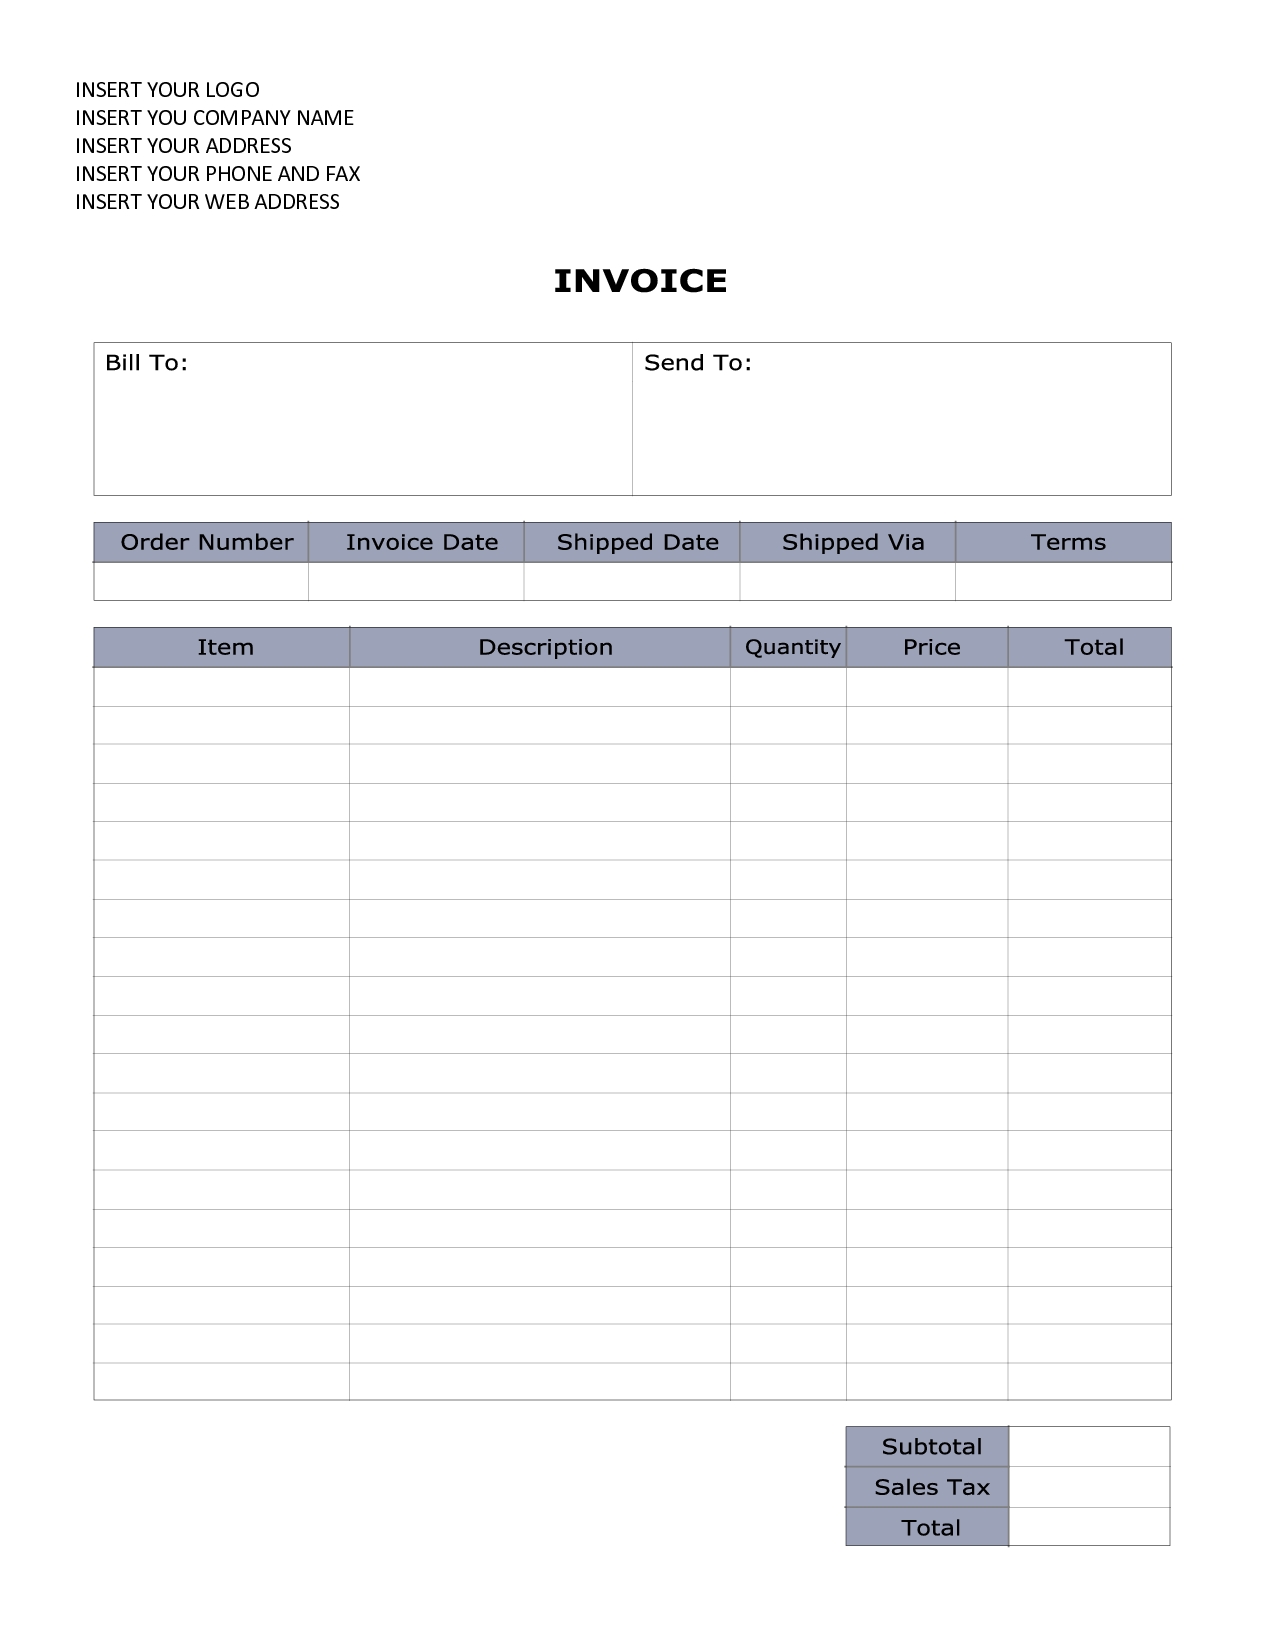 blank invoice microsoft word free invoice template microsoft word invoice template download